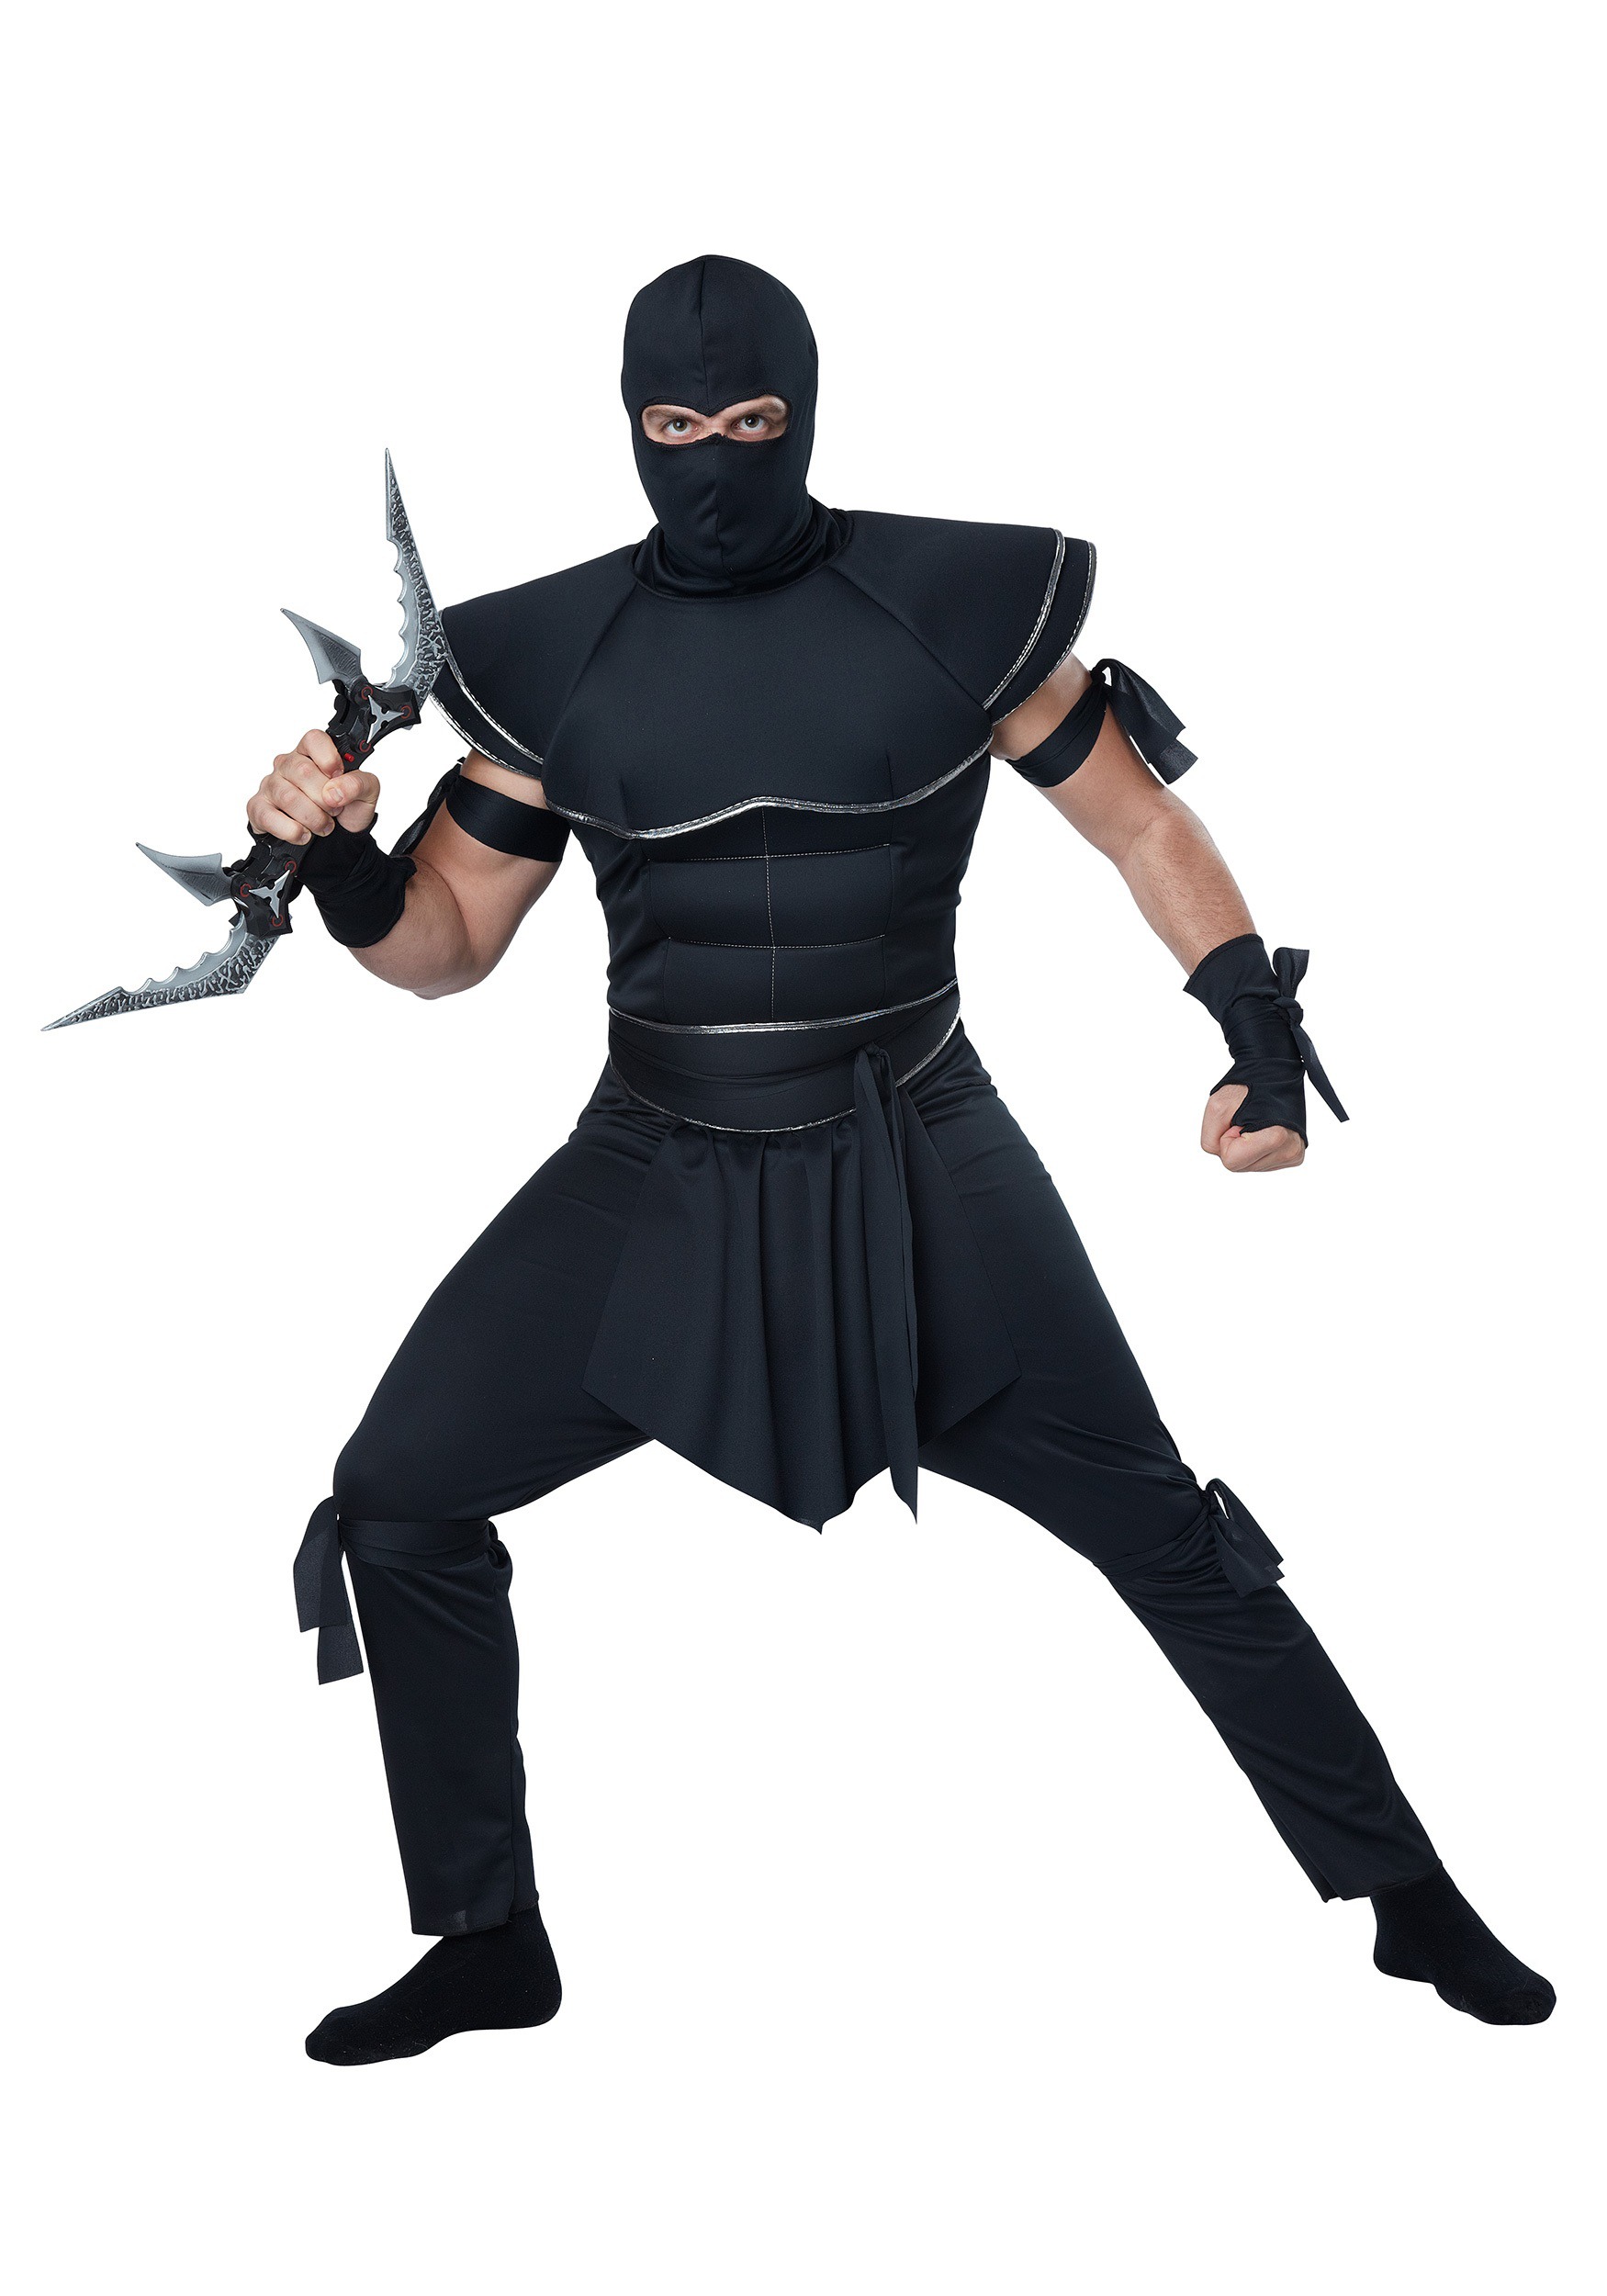 https://images.halloweencostumes.com/products/32787/1-1/adult-ninja-warrior-costume.jpg